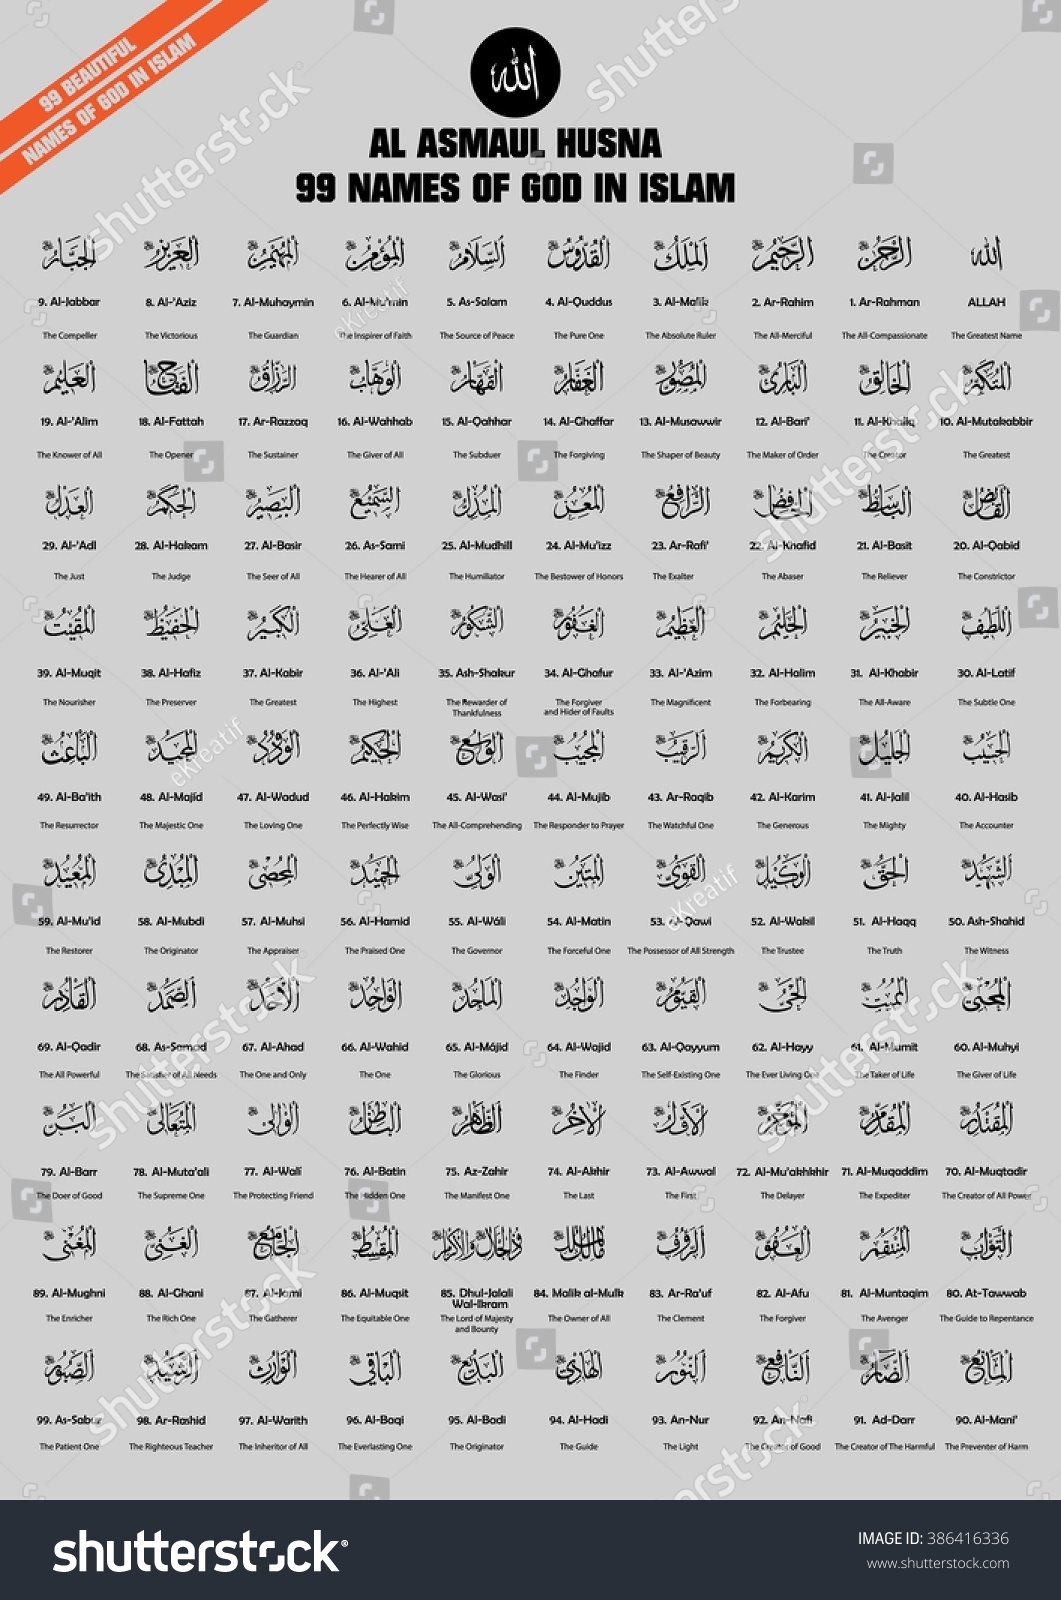 99 Names Of Allah Chart